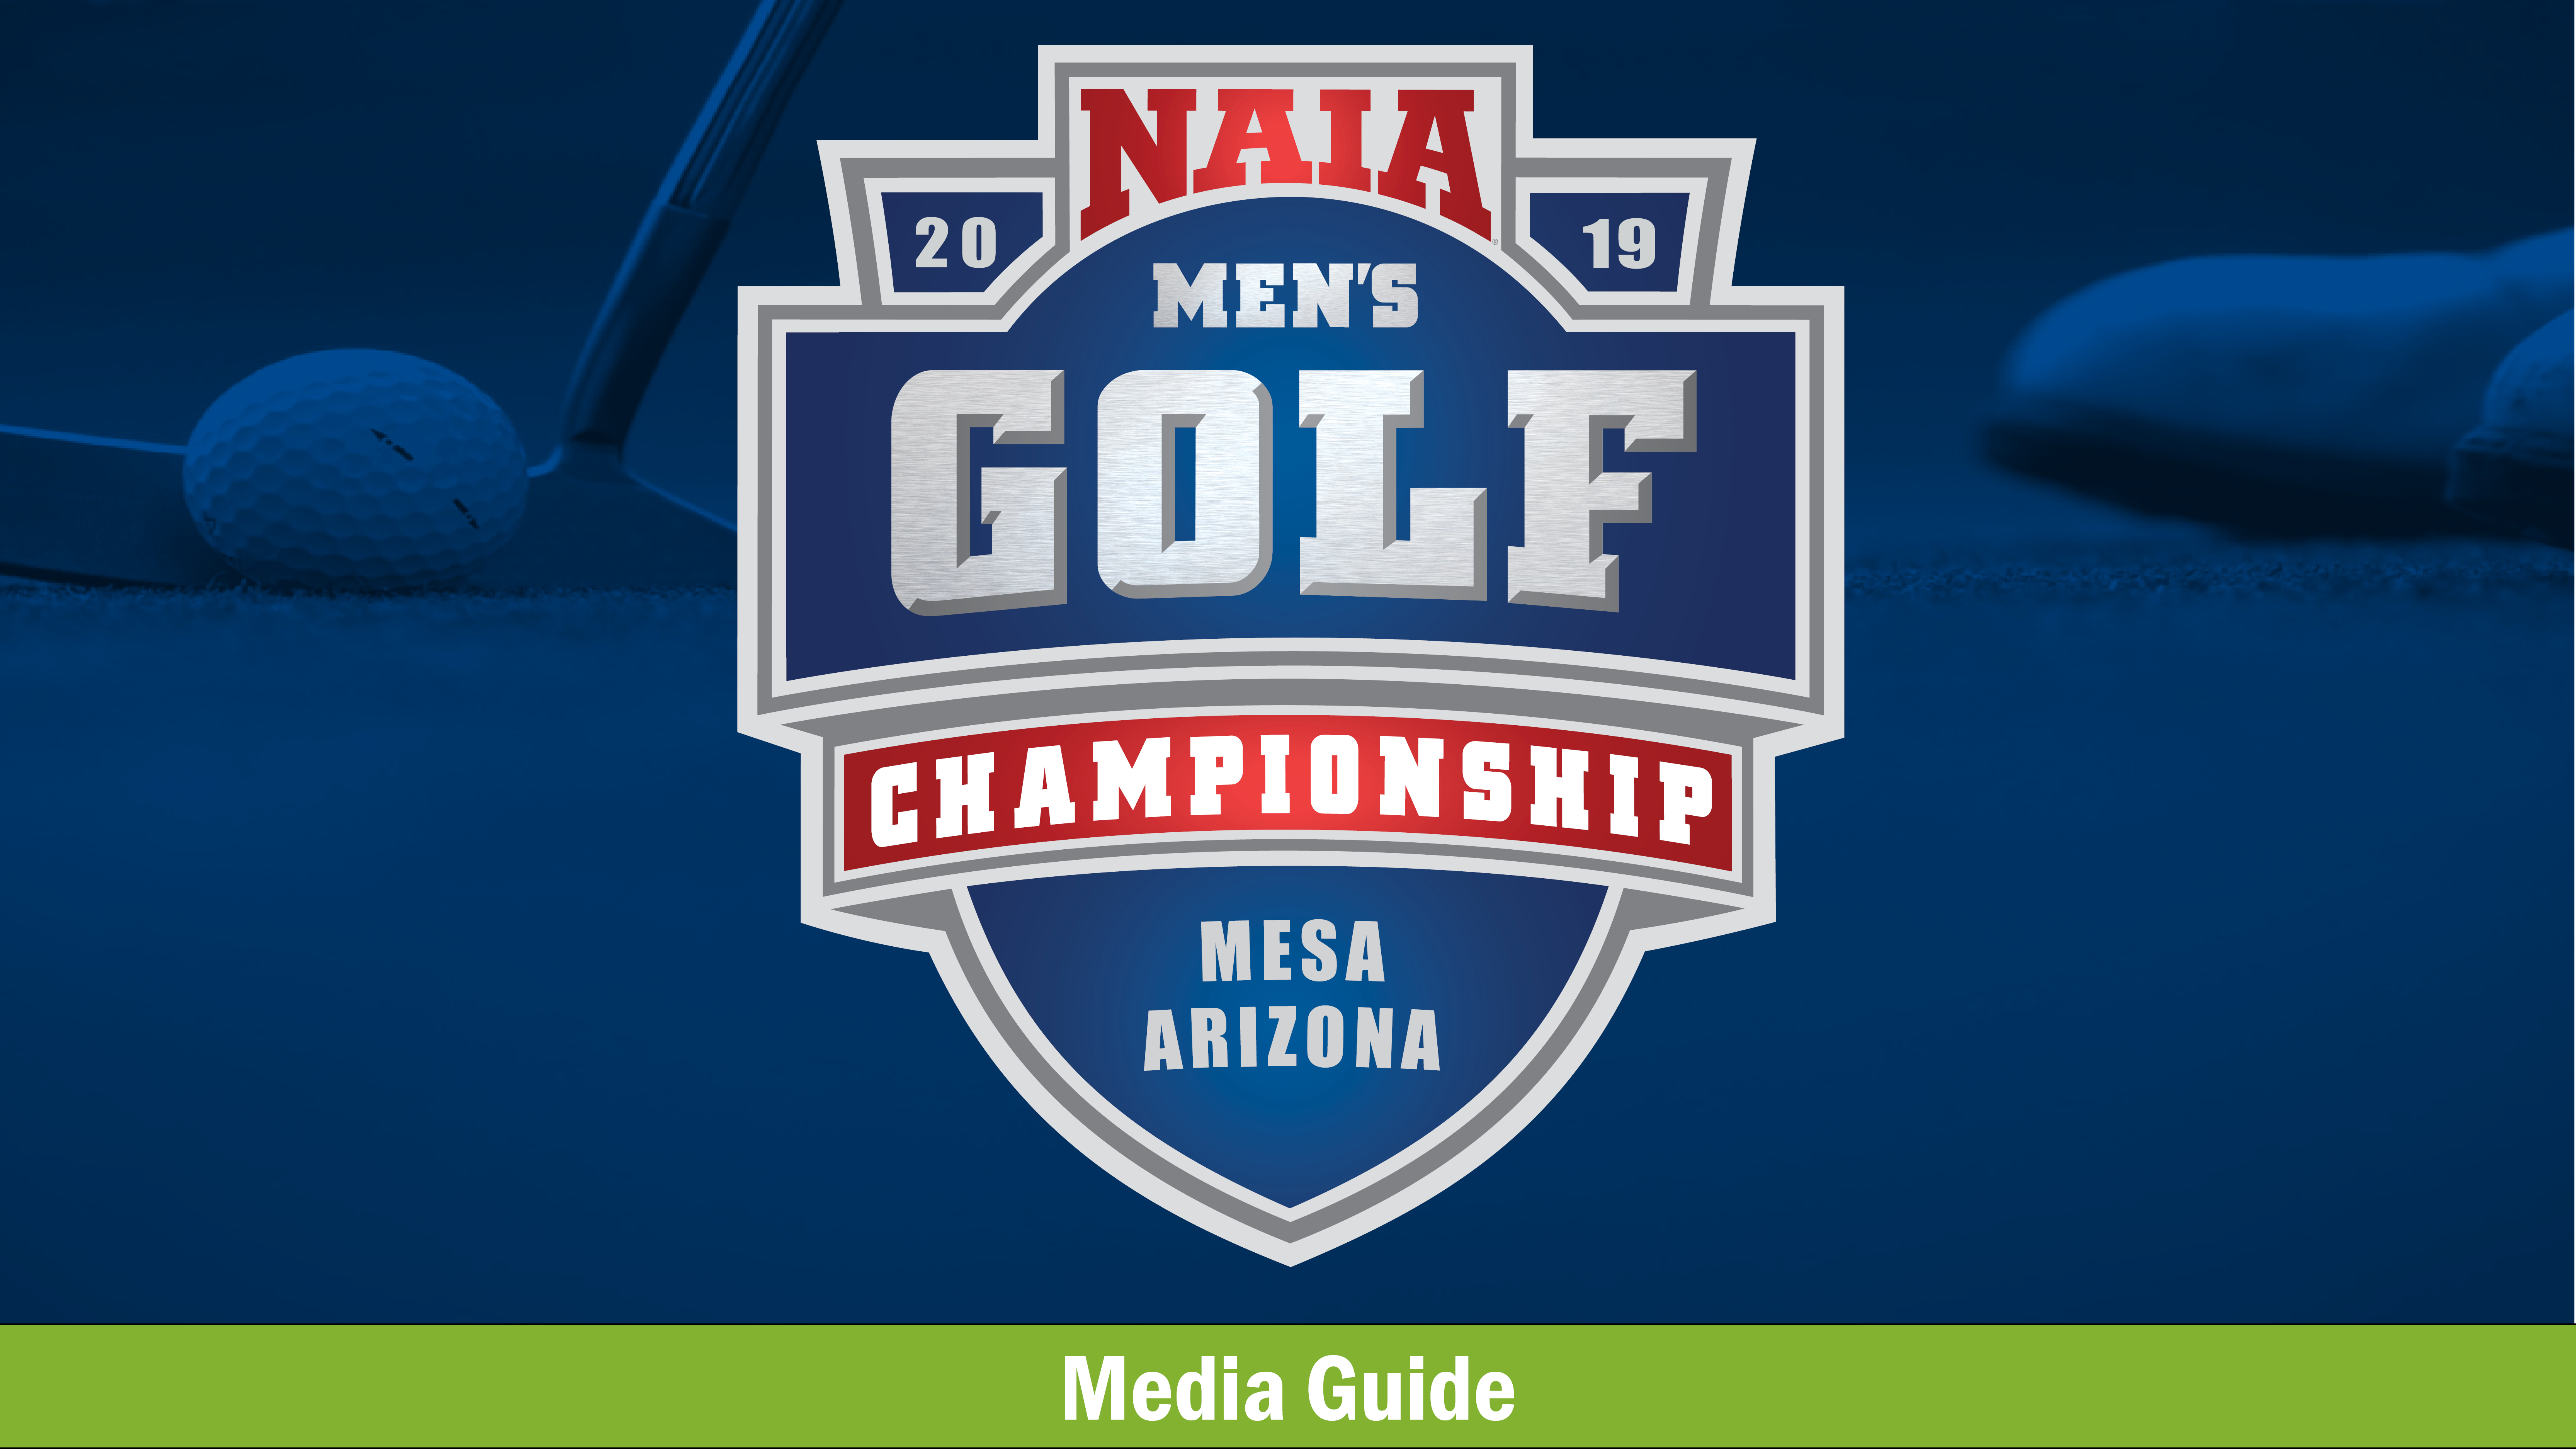 2019 Men's Golf National Championship Media Guide